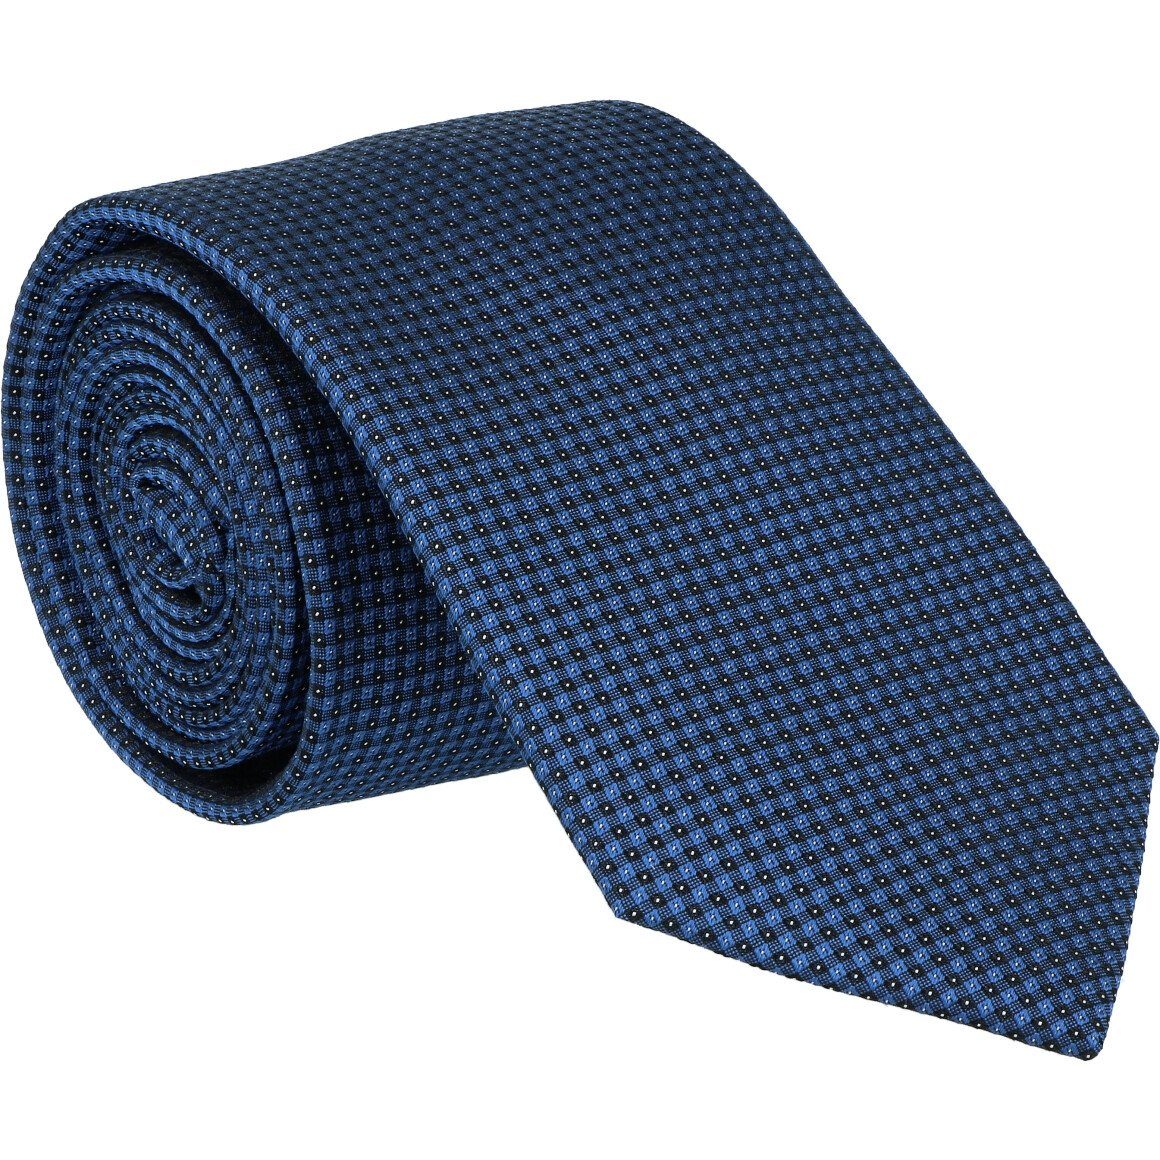 WILLEN Krawatte blau Krawatte Willen